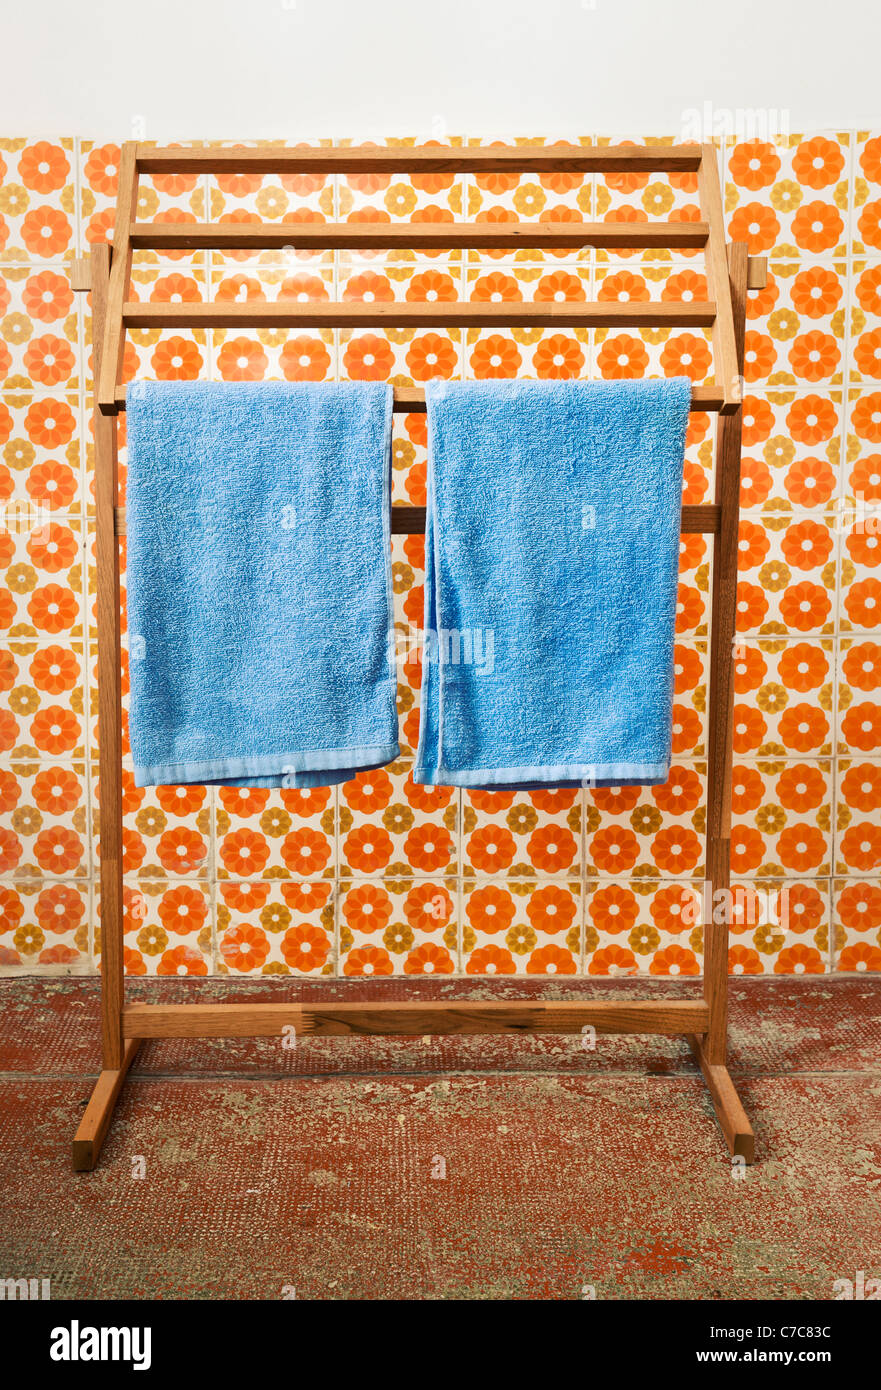 Blue towels on hanger in retro bathroom interior Stock Photo